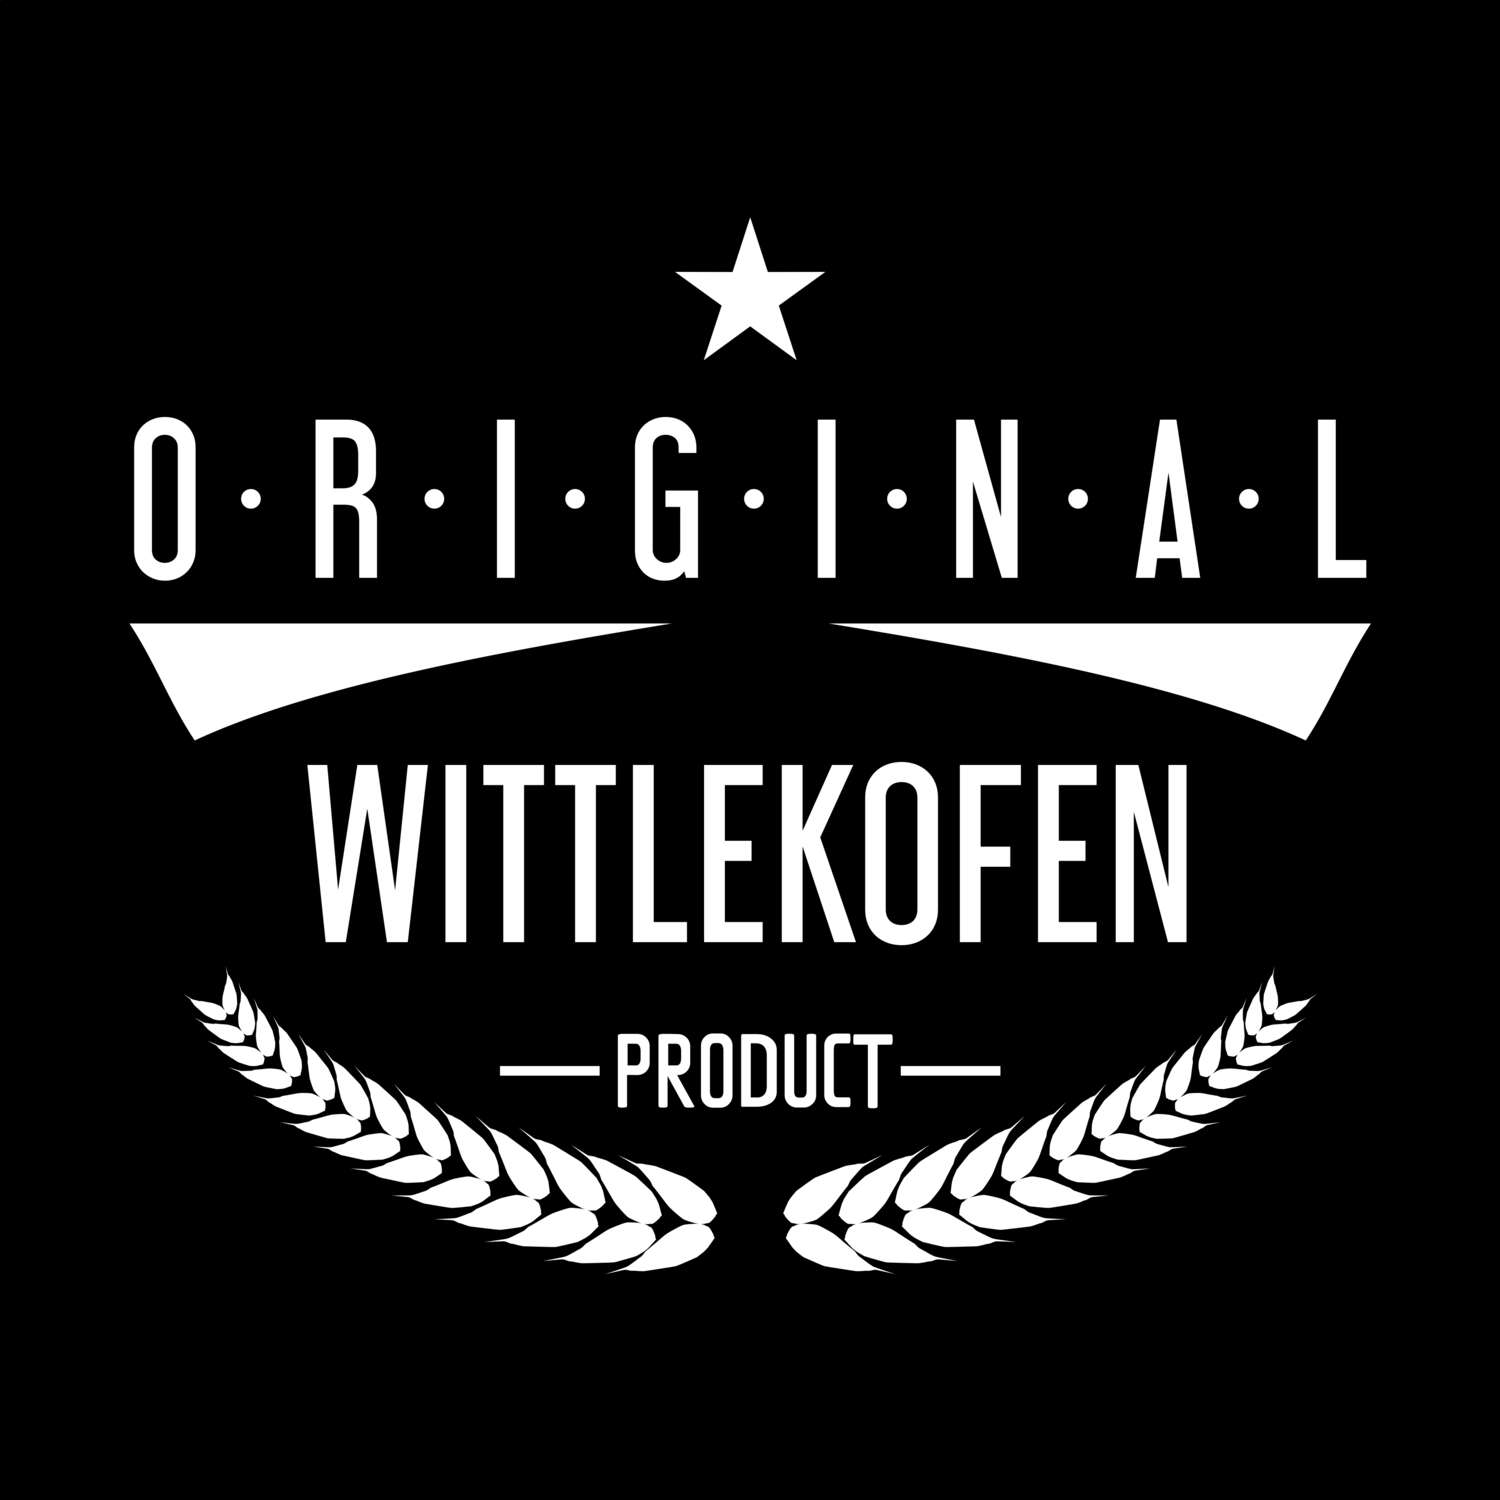 Wittlekofen T-Shirt »Original Product«